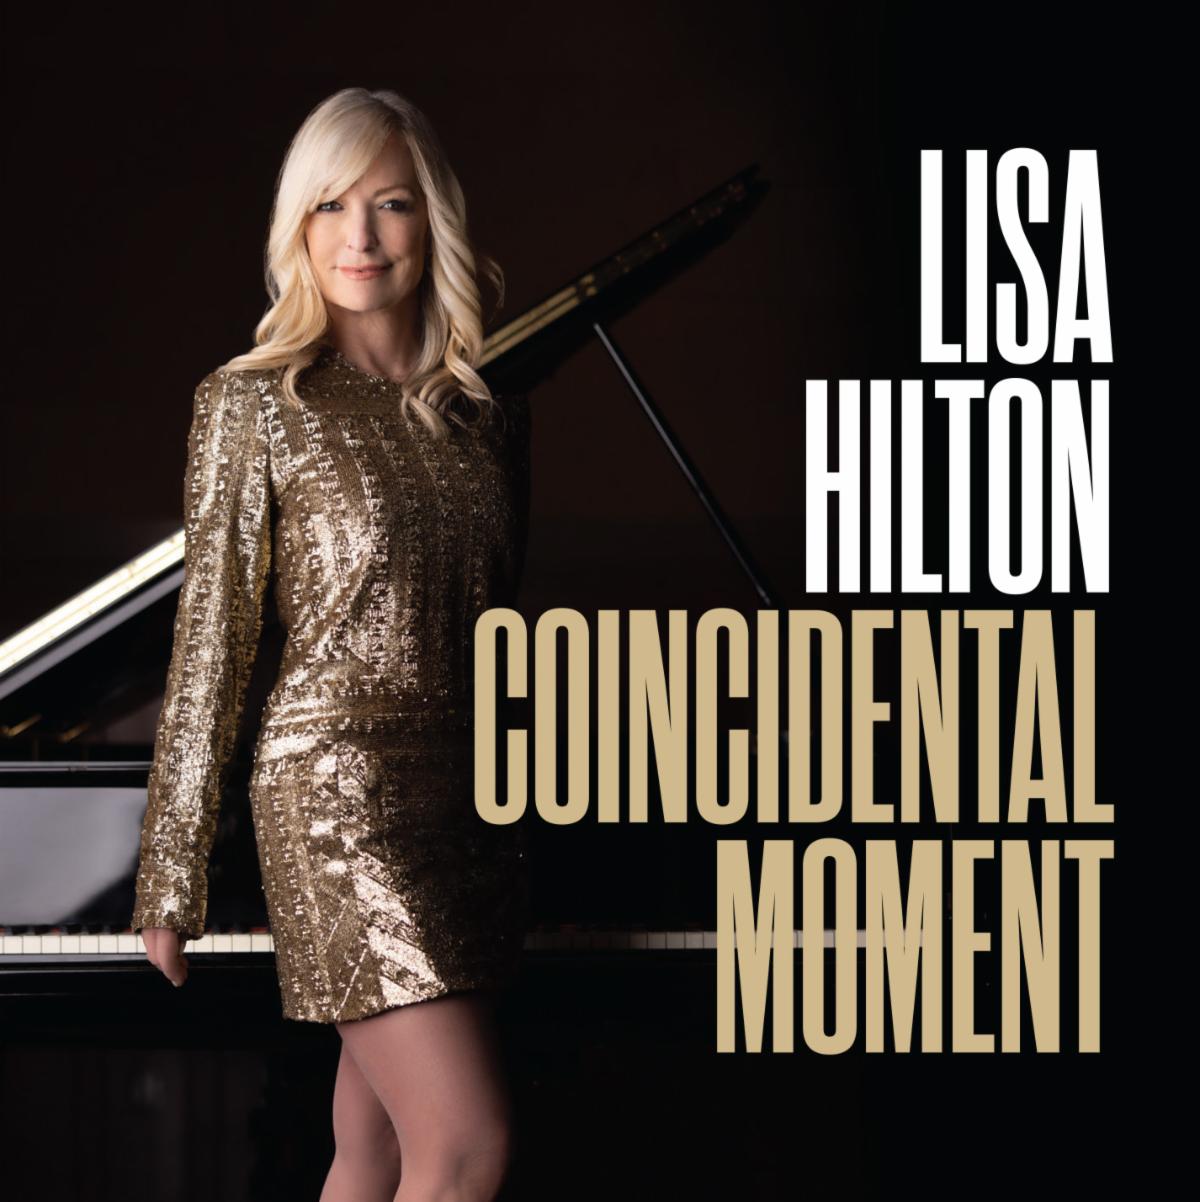 LISA HILTON - Coincidental Moment cover 